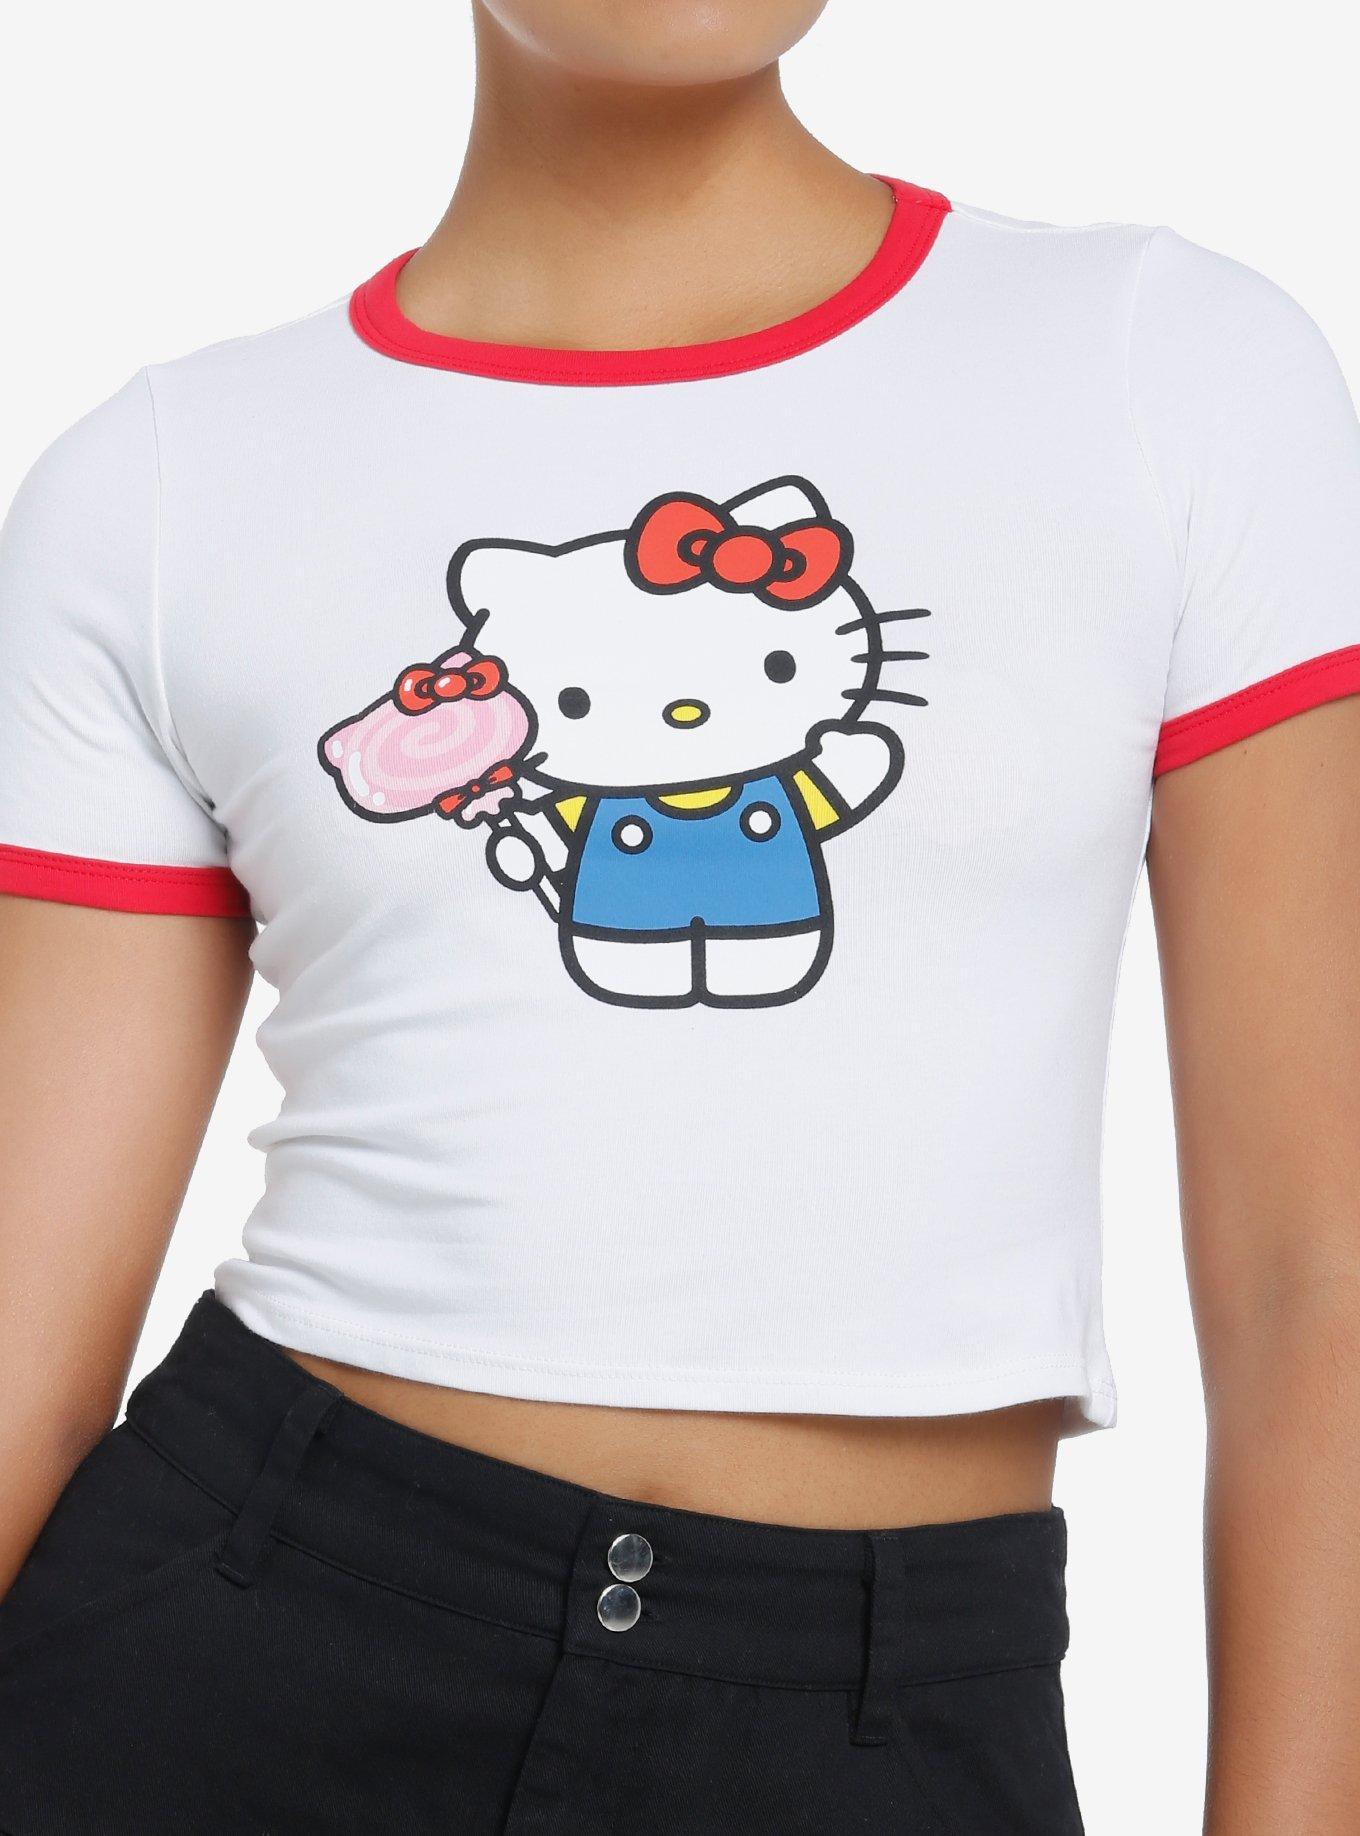 Hello Kitty Candy Girls Ringer Baby T-Shirt